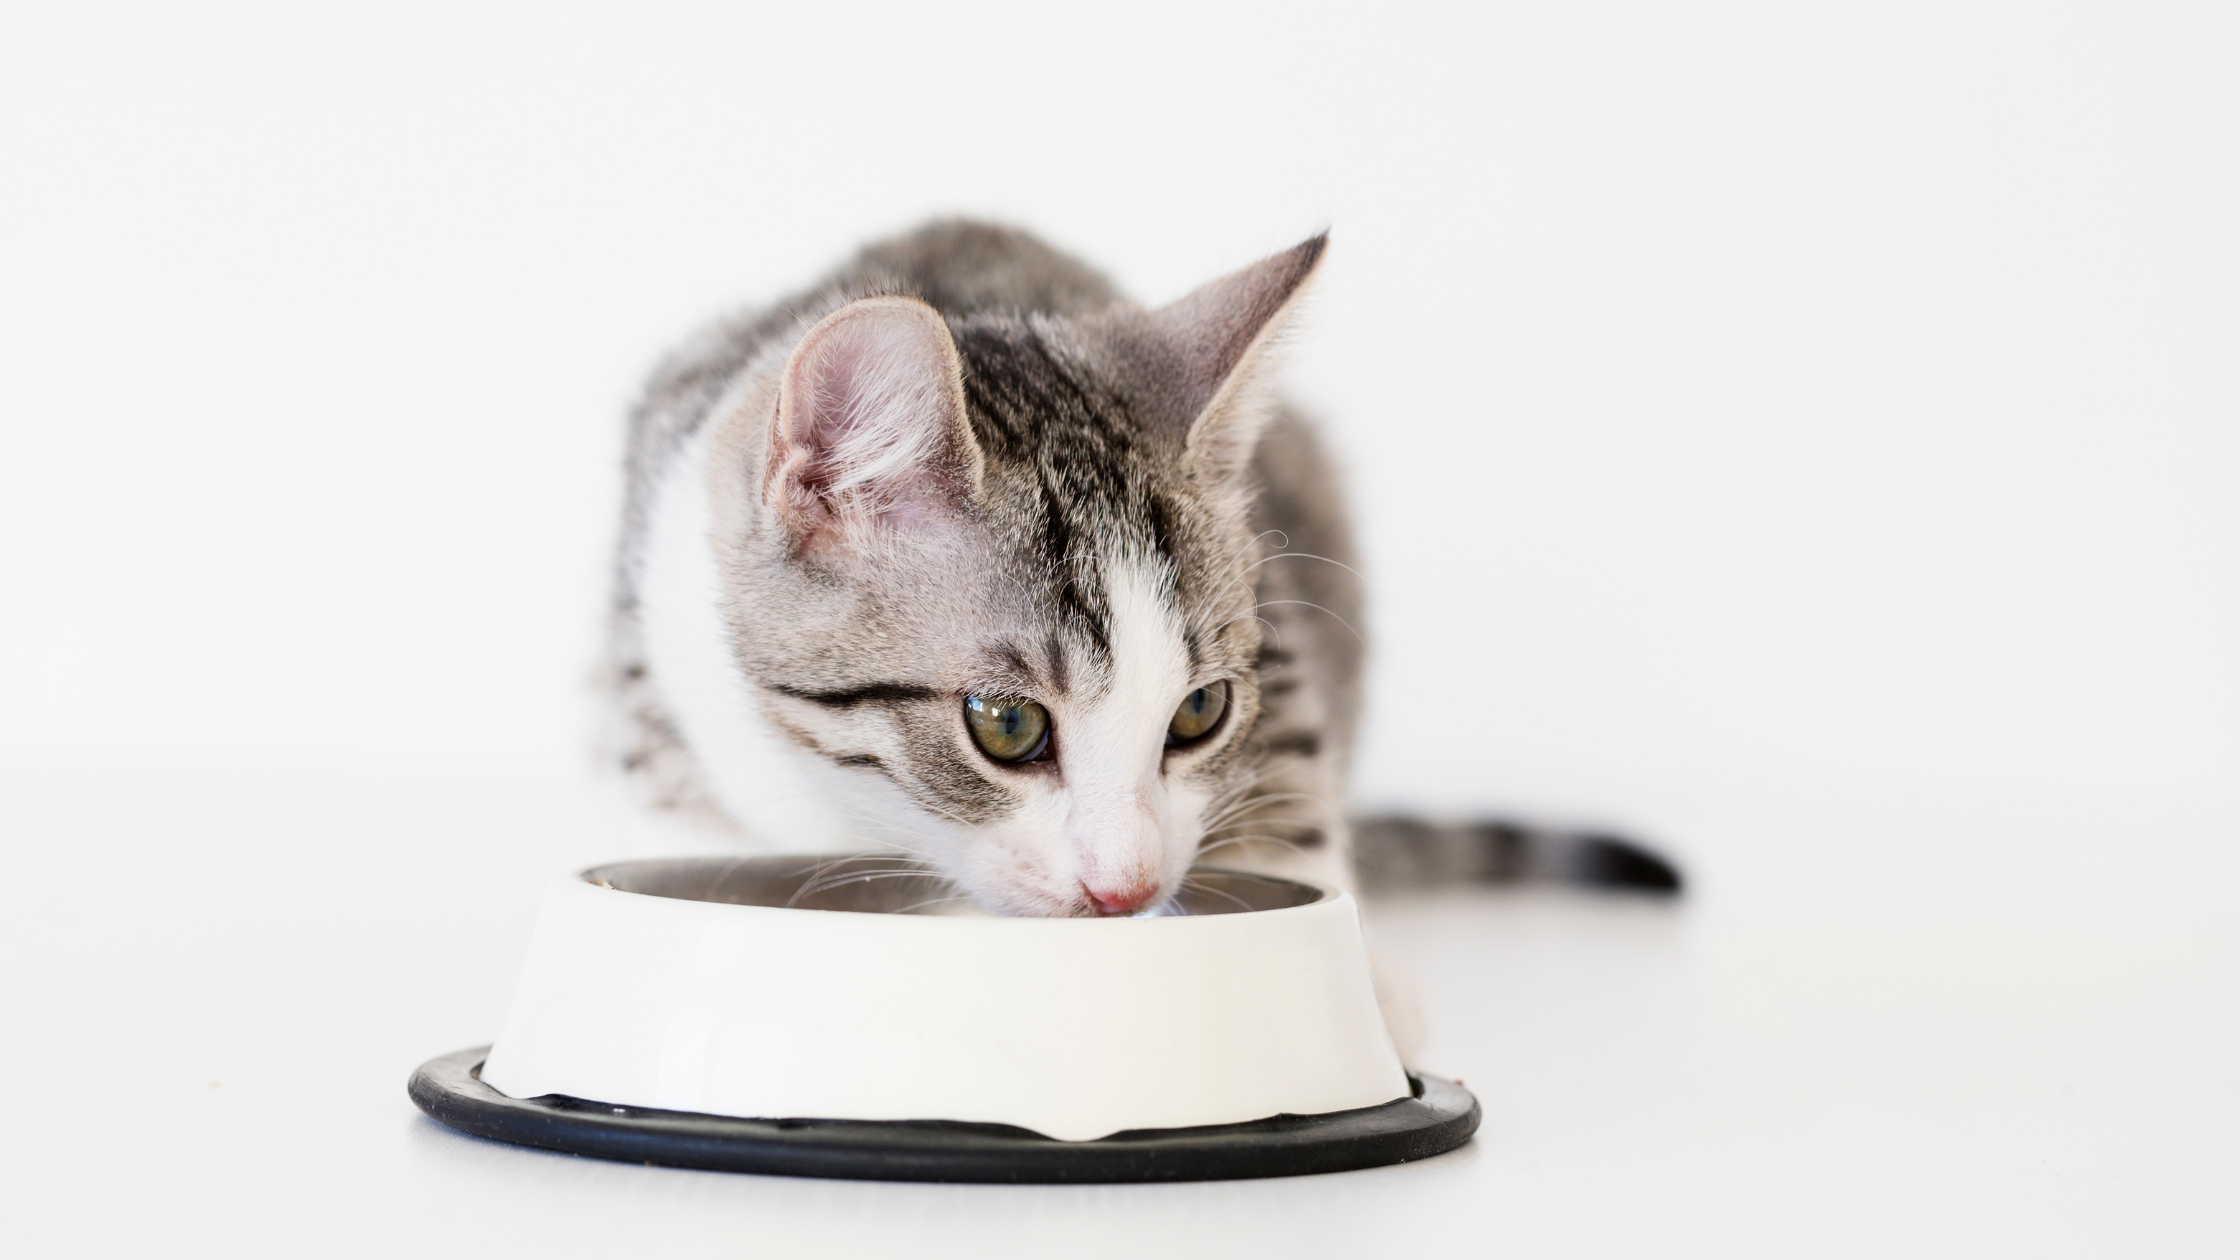 Kitten Nutrition 101 - Cat Food & Cat Nutrition (Part 1)